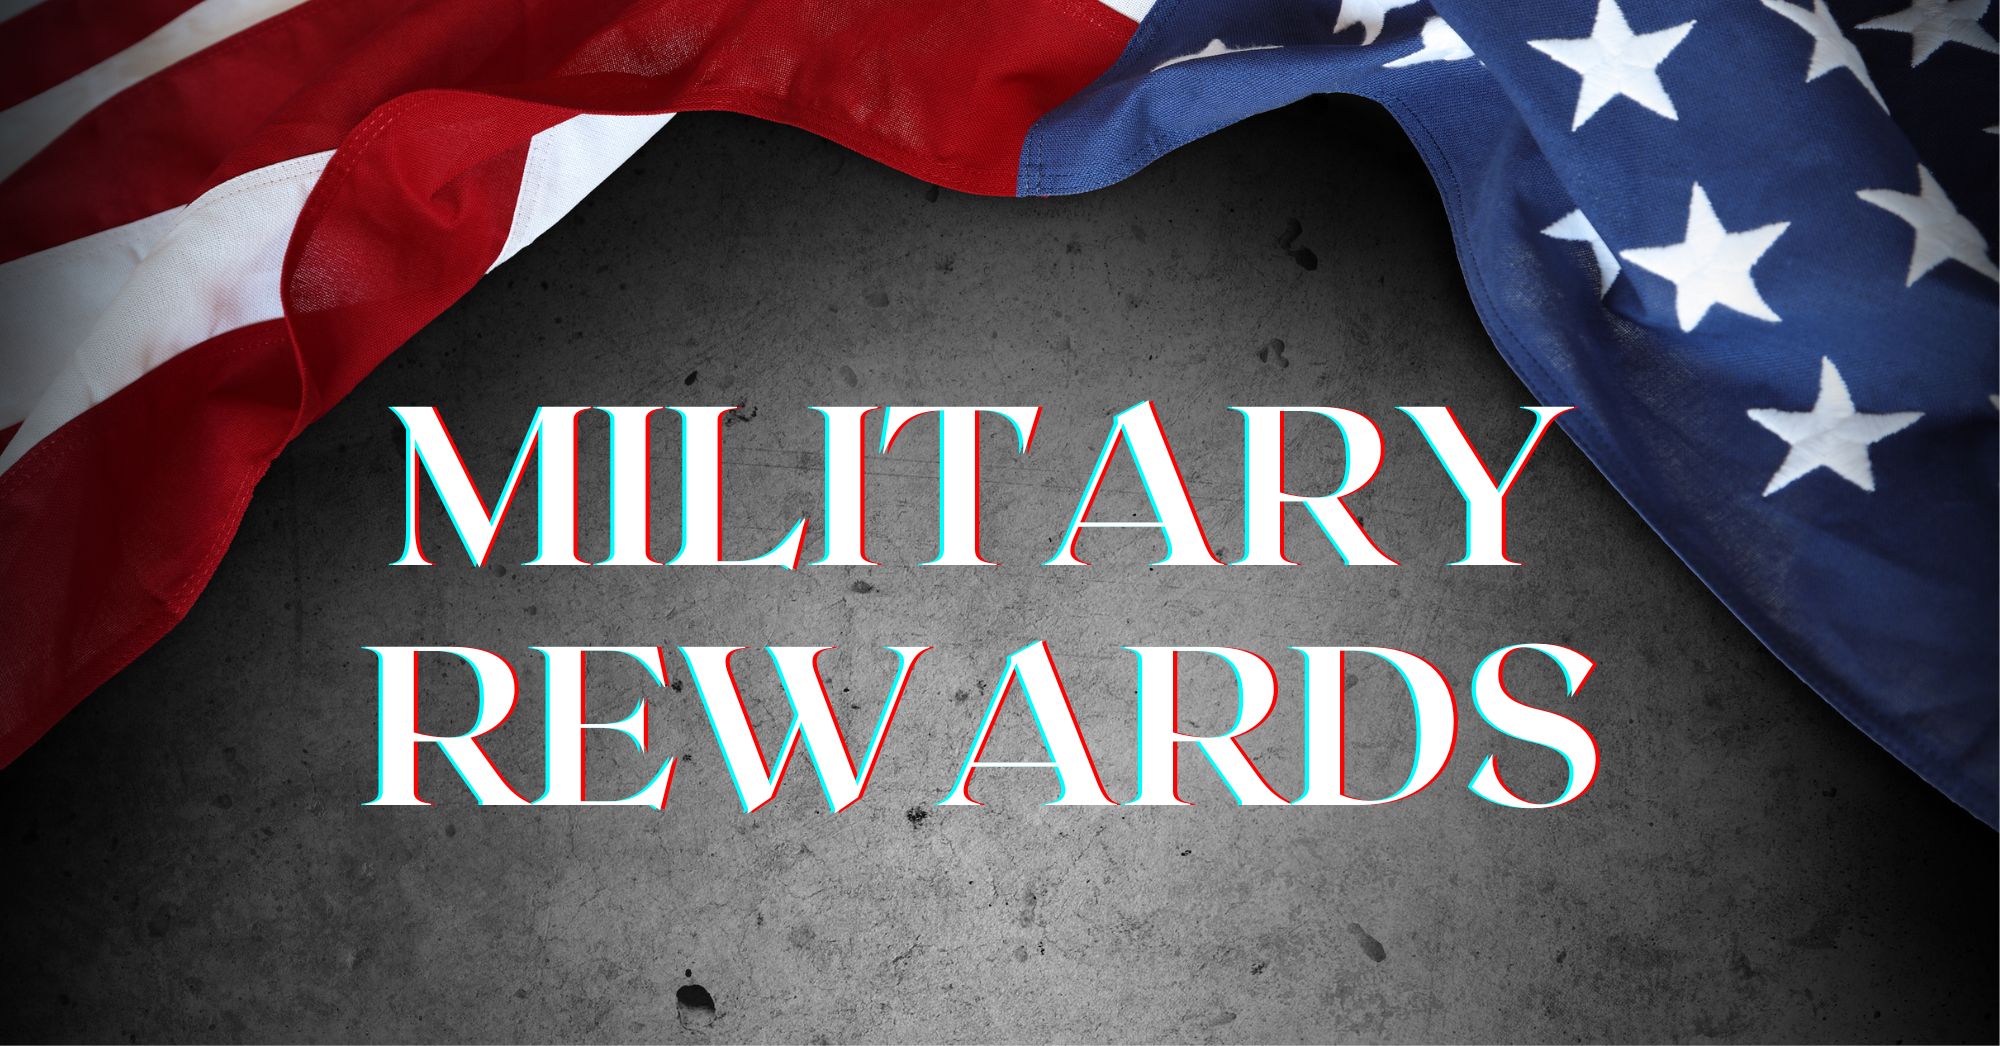 MILITARY REWARDS